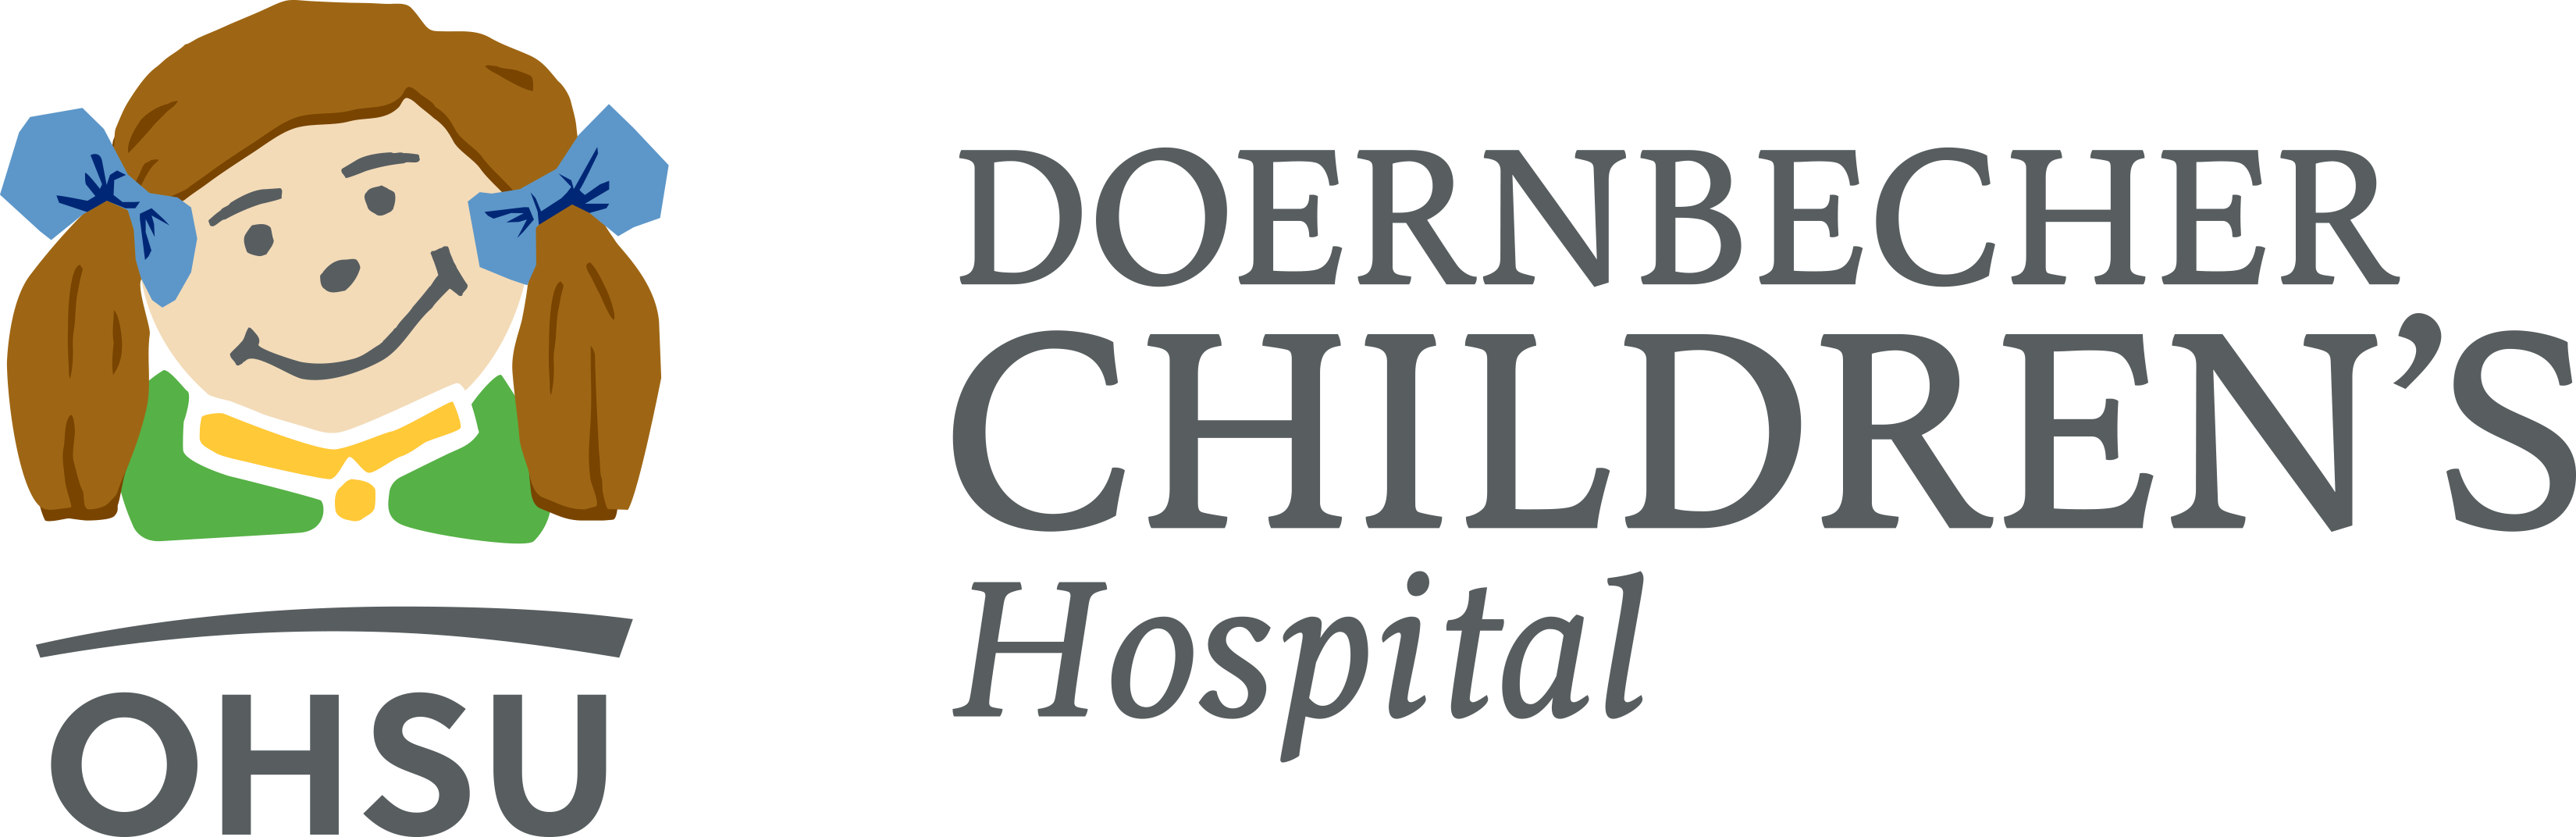 Doernbecher Children's Hospital 